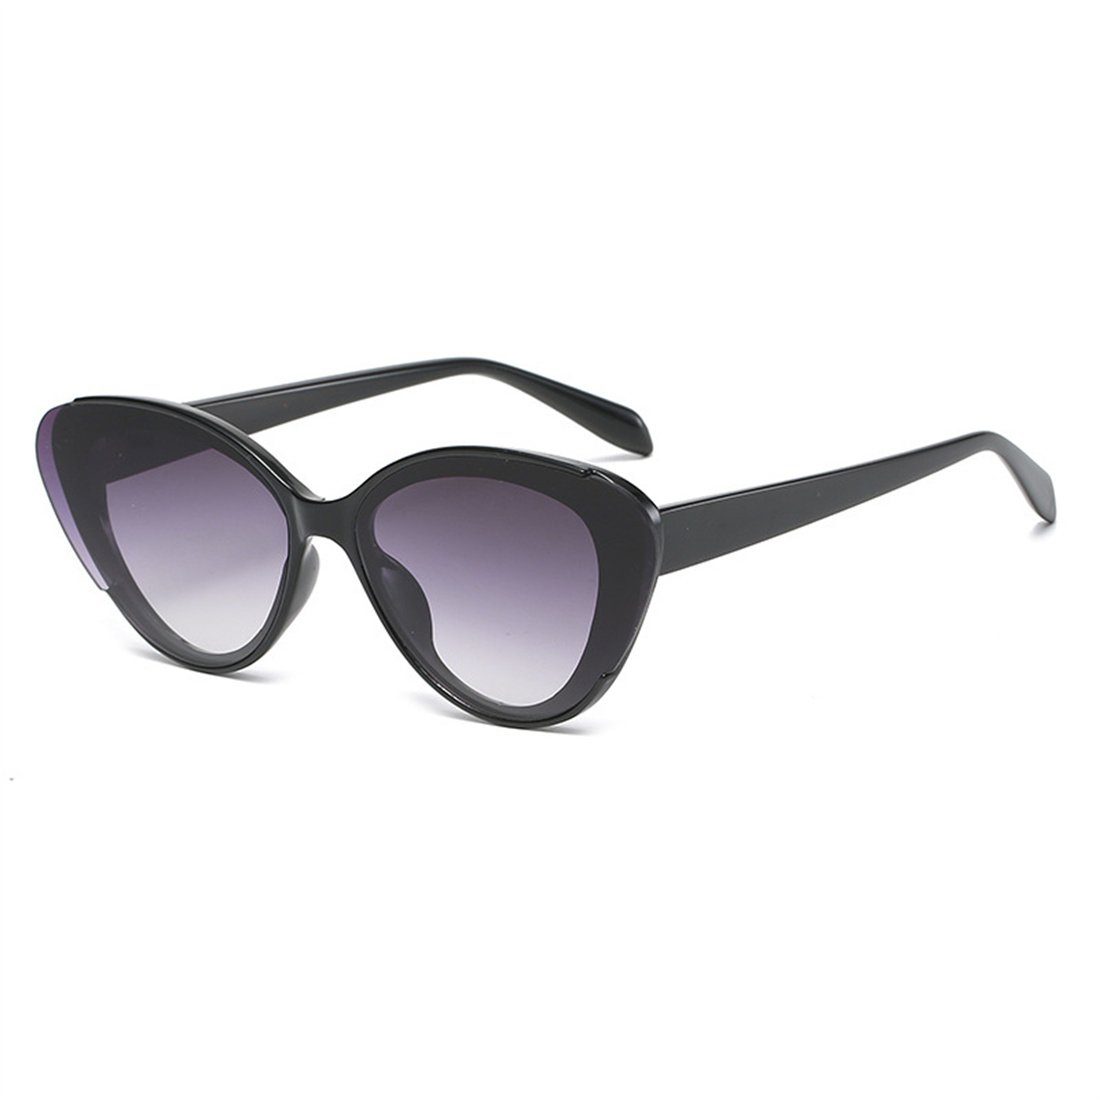 Katzenaugen-Sonnenbrille, Blackout-Sonnenbrille Sonnenbrille DÖRÖY trendige Damenmode